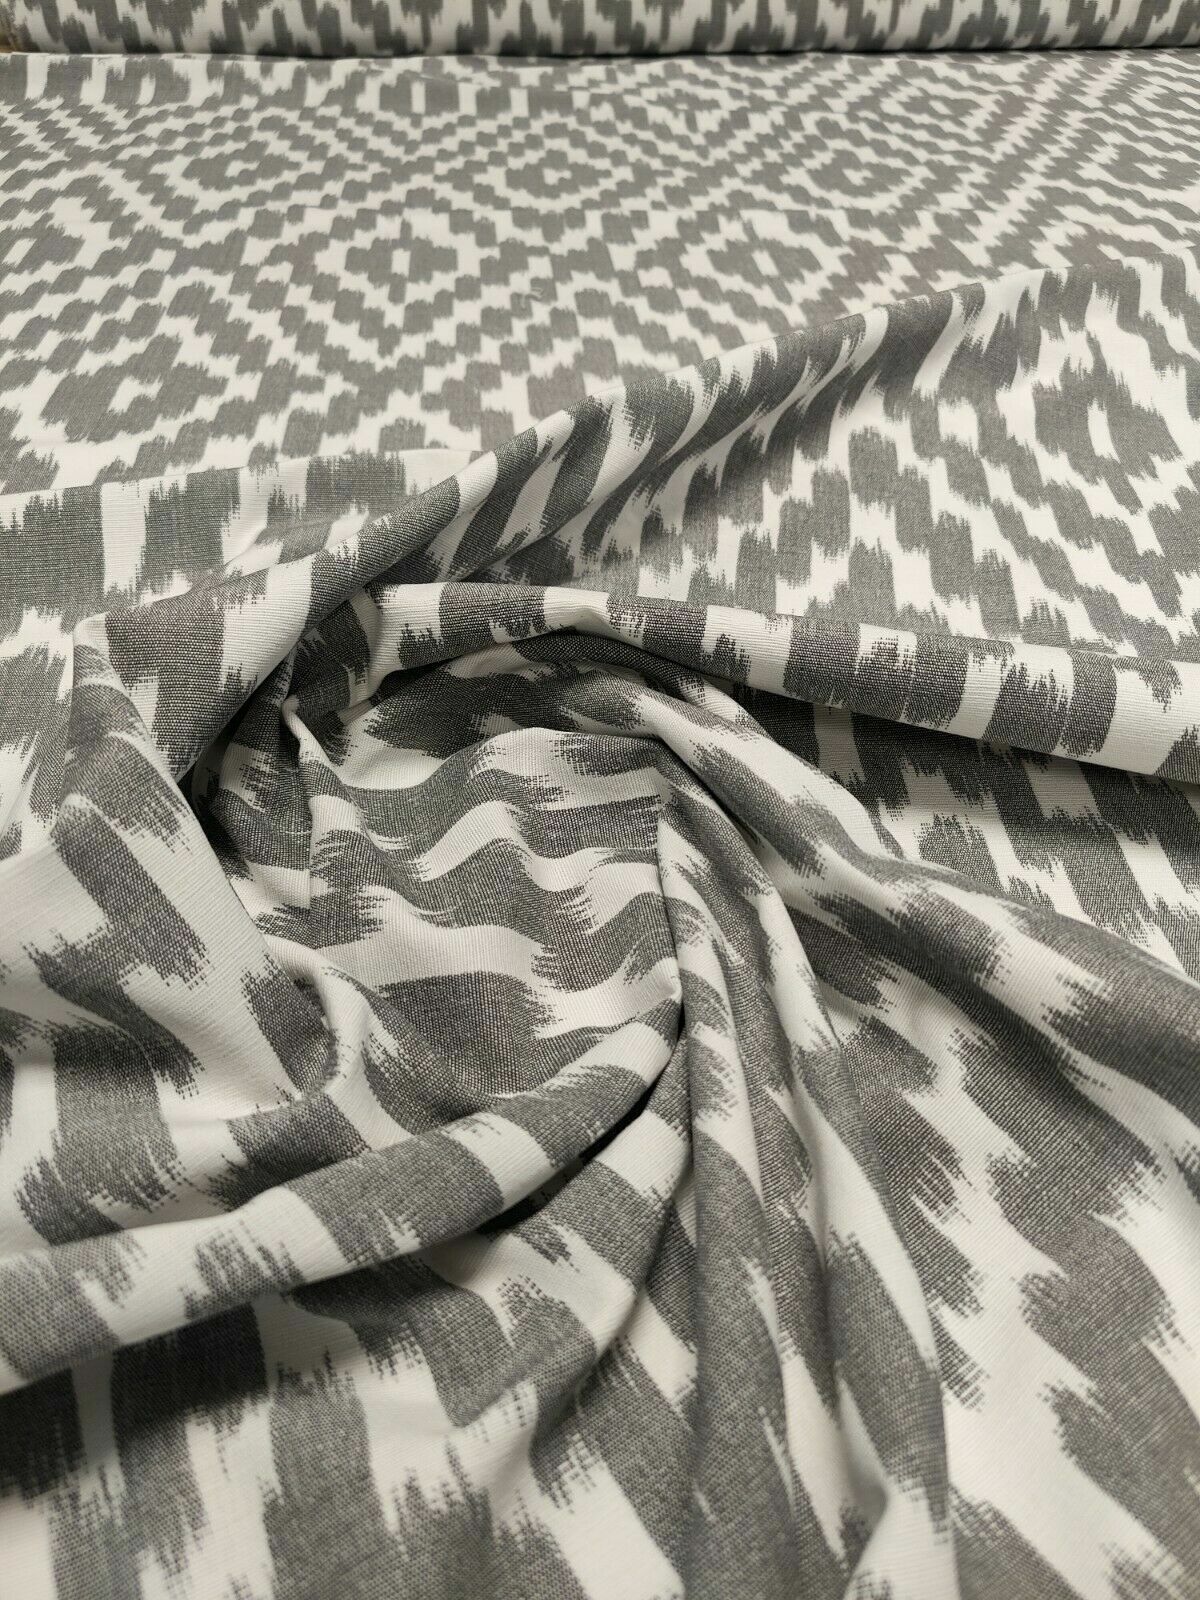 Scion Uteki Granite Curtain Fabric By The Metre